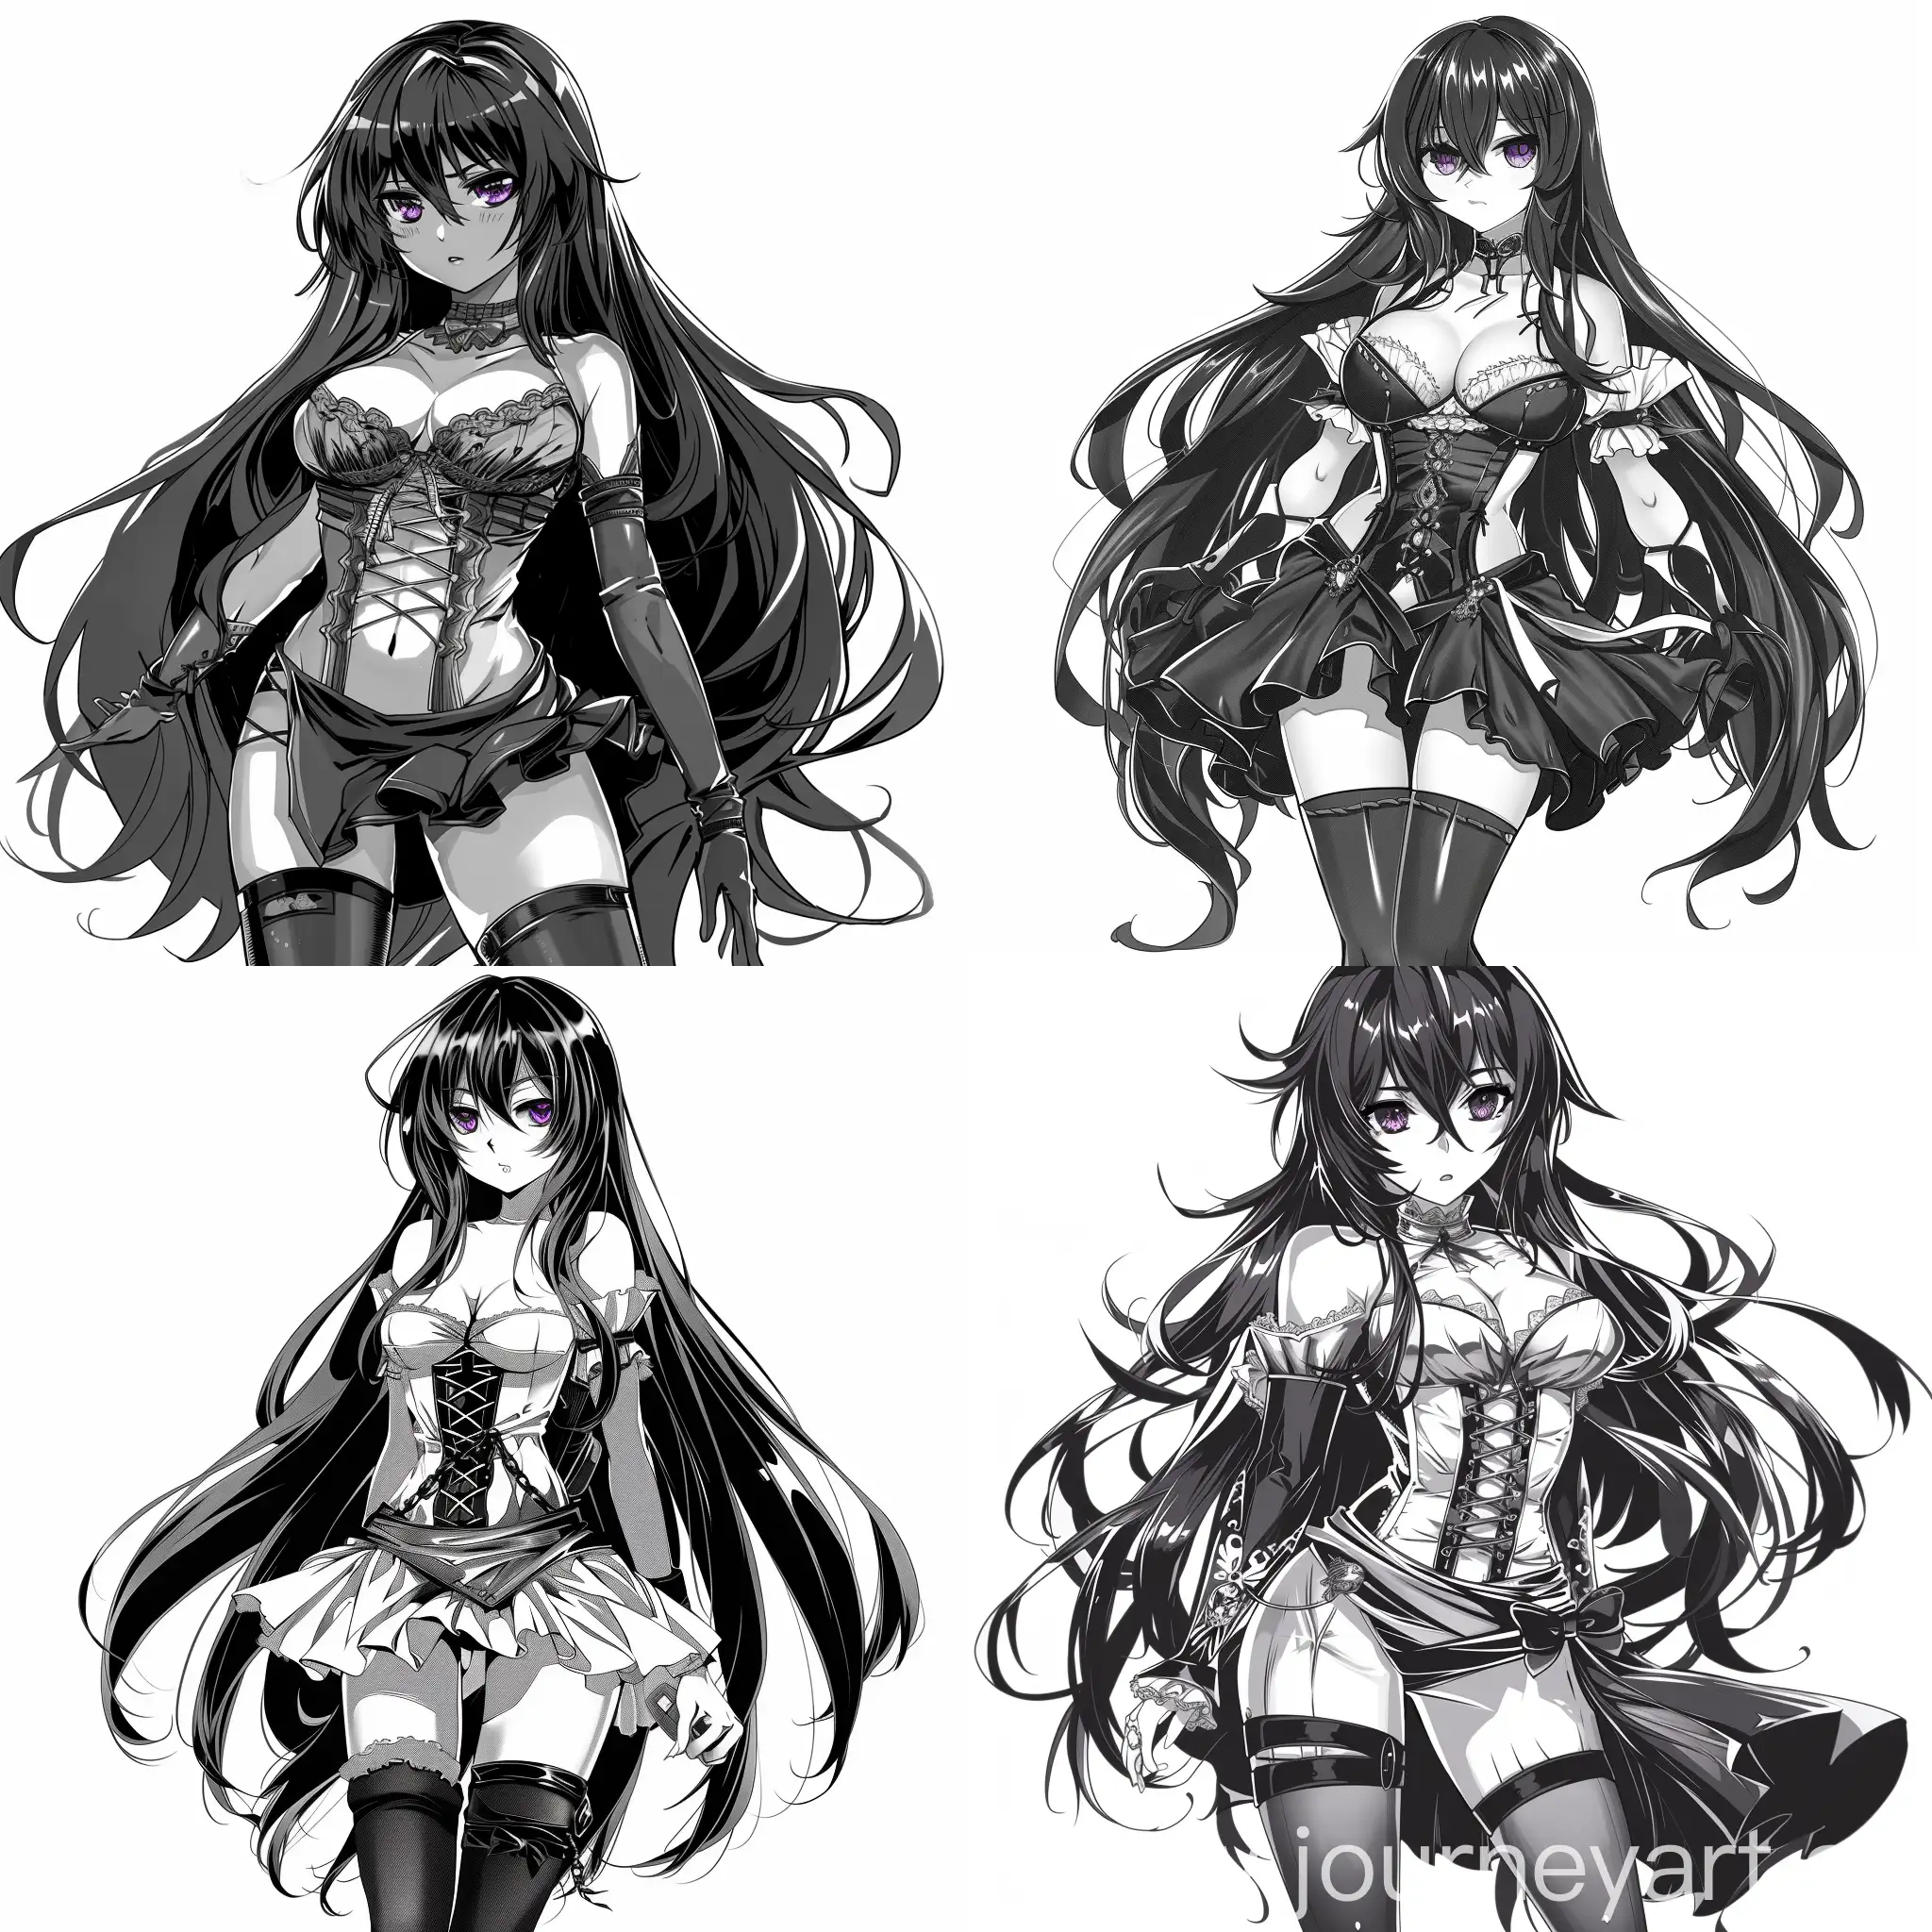 Elegant-Mangastyle-Warrior-Girl-in-Intricate-Black-and-White-Rendering